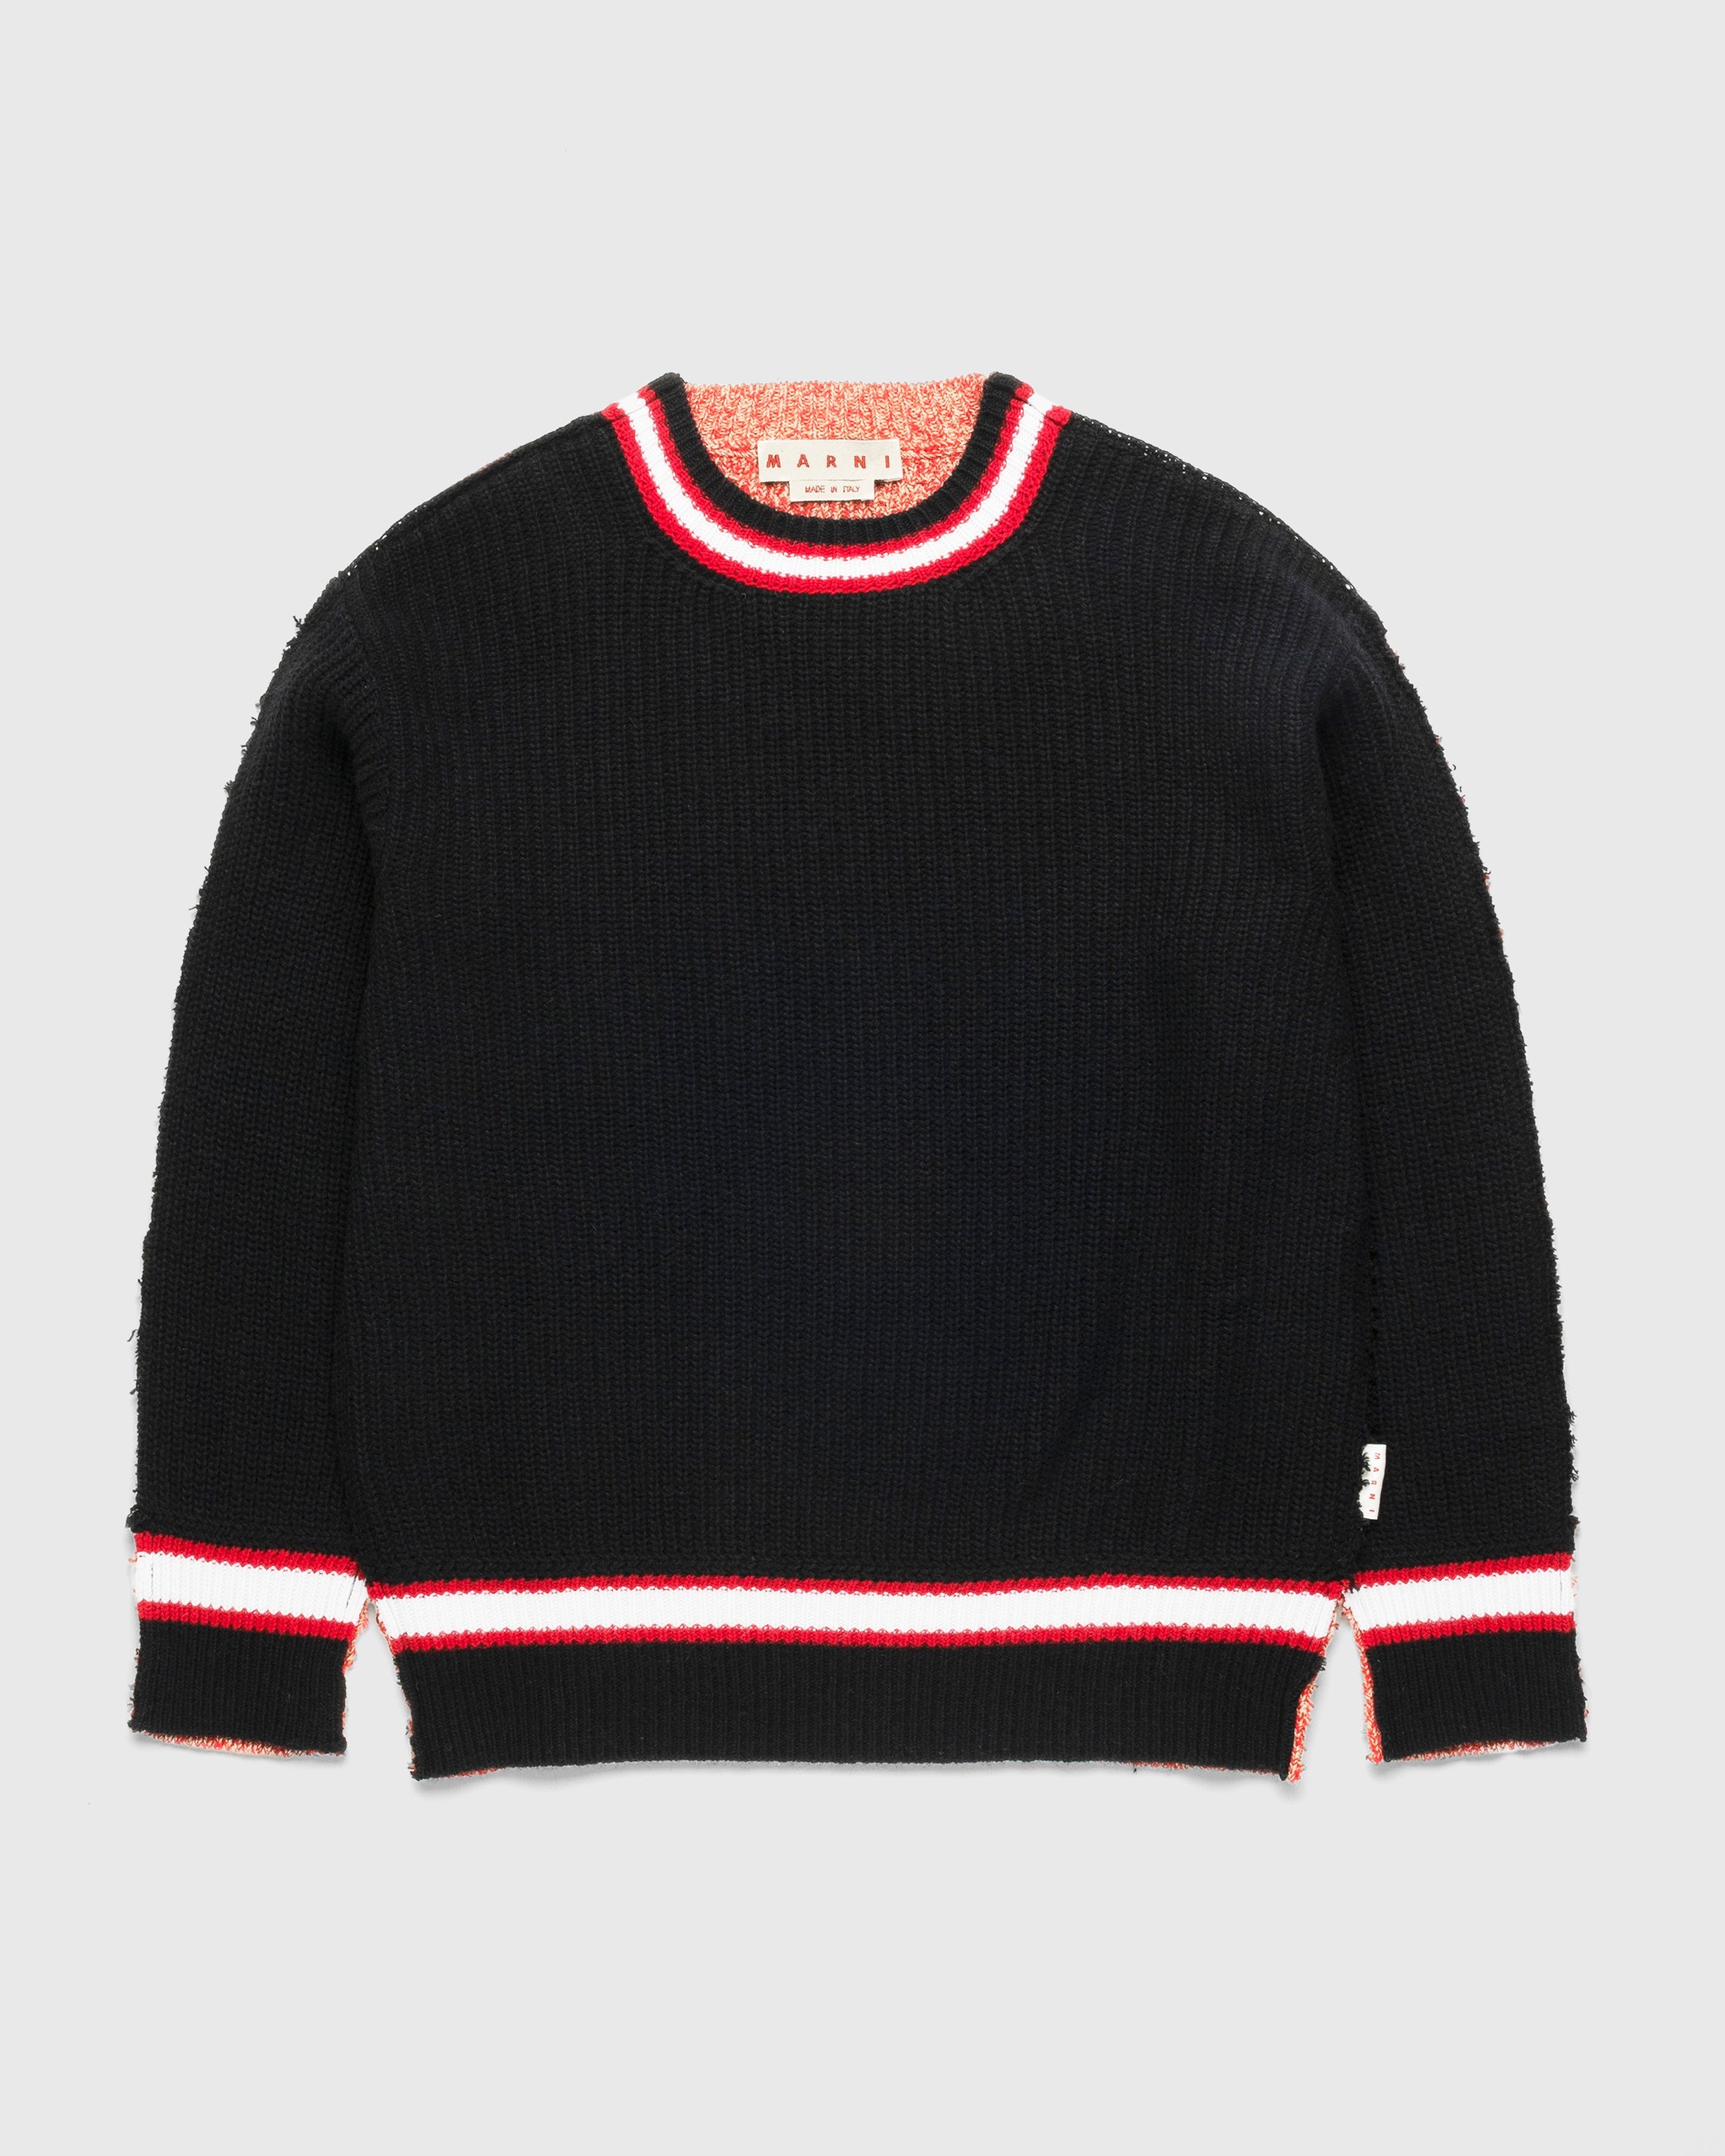 Marni – Roundneck Sweater Black - Crewnecks - Black - Image 1